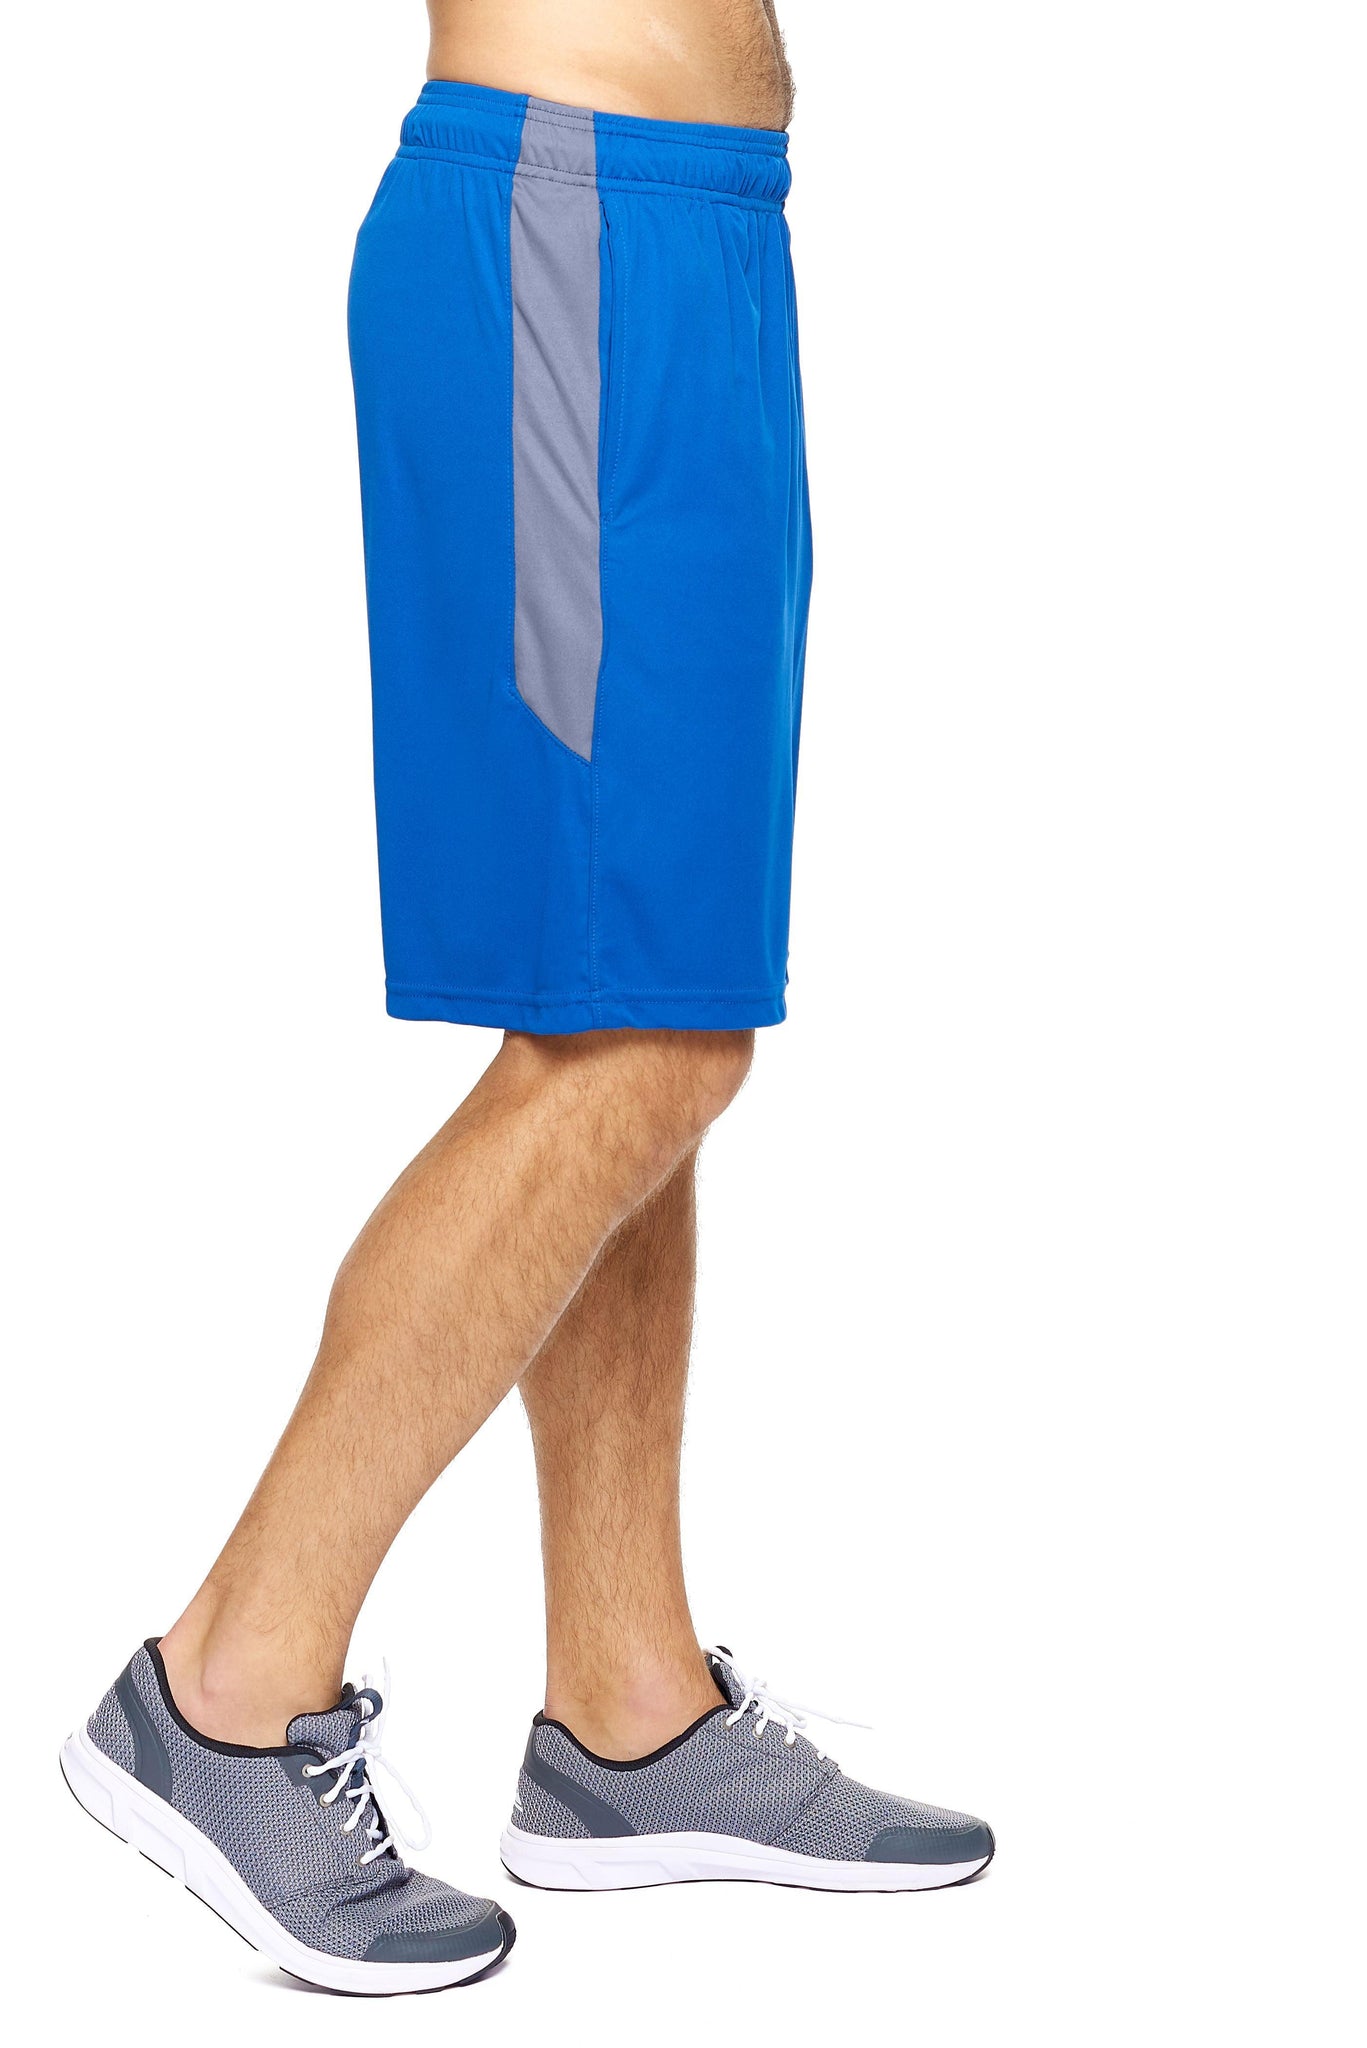 Expert Brand Men's Royal Blue pk MaX™ Outdoor Shorts Image 3#royal-steel